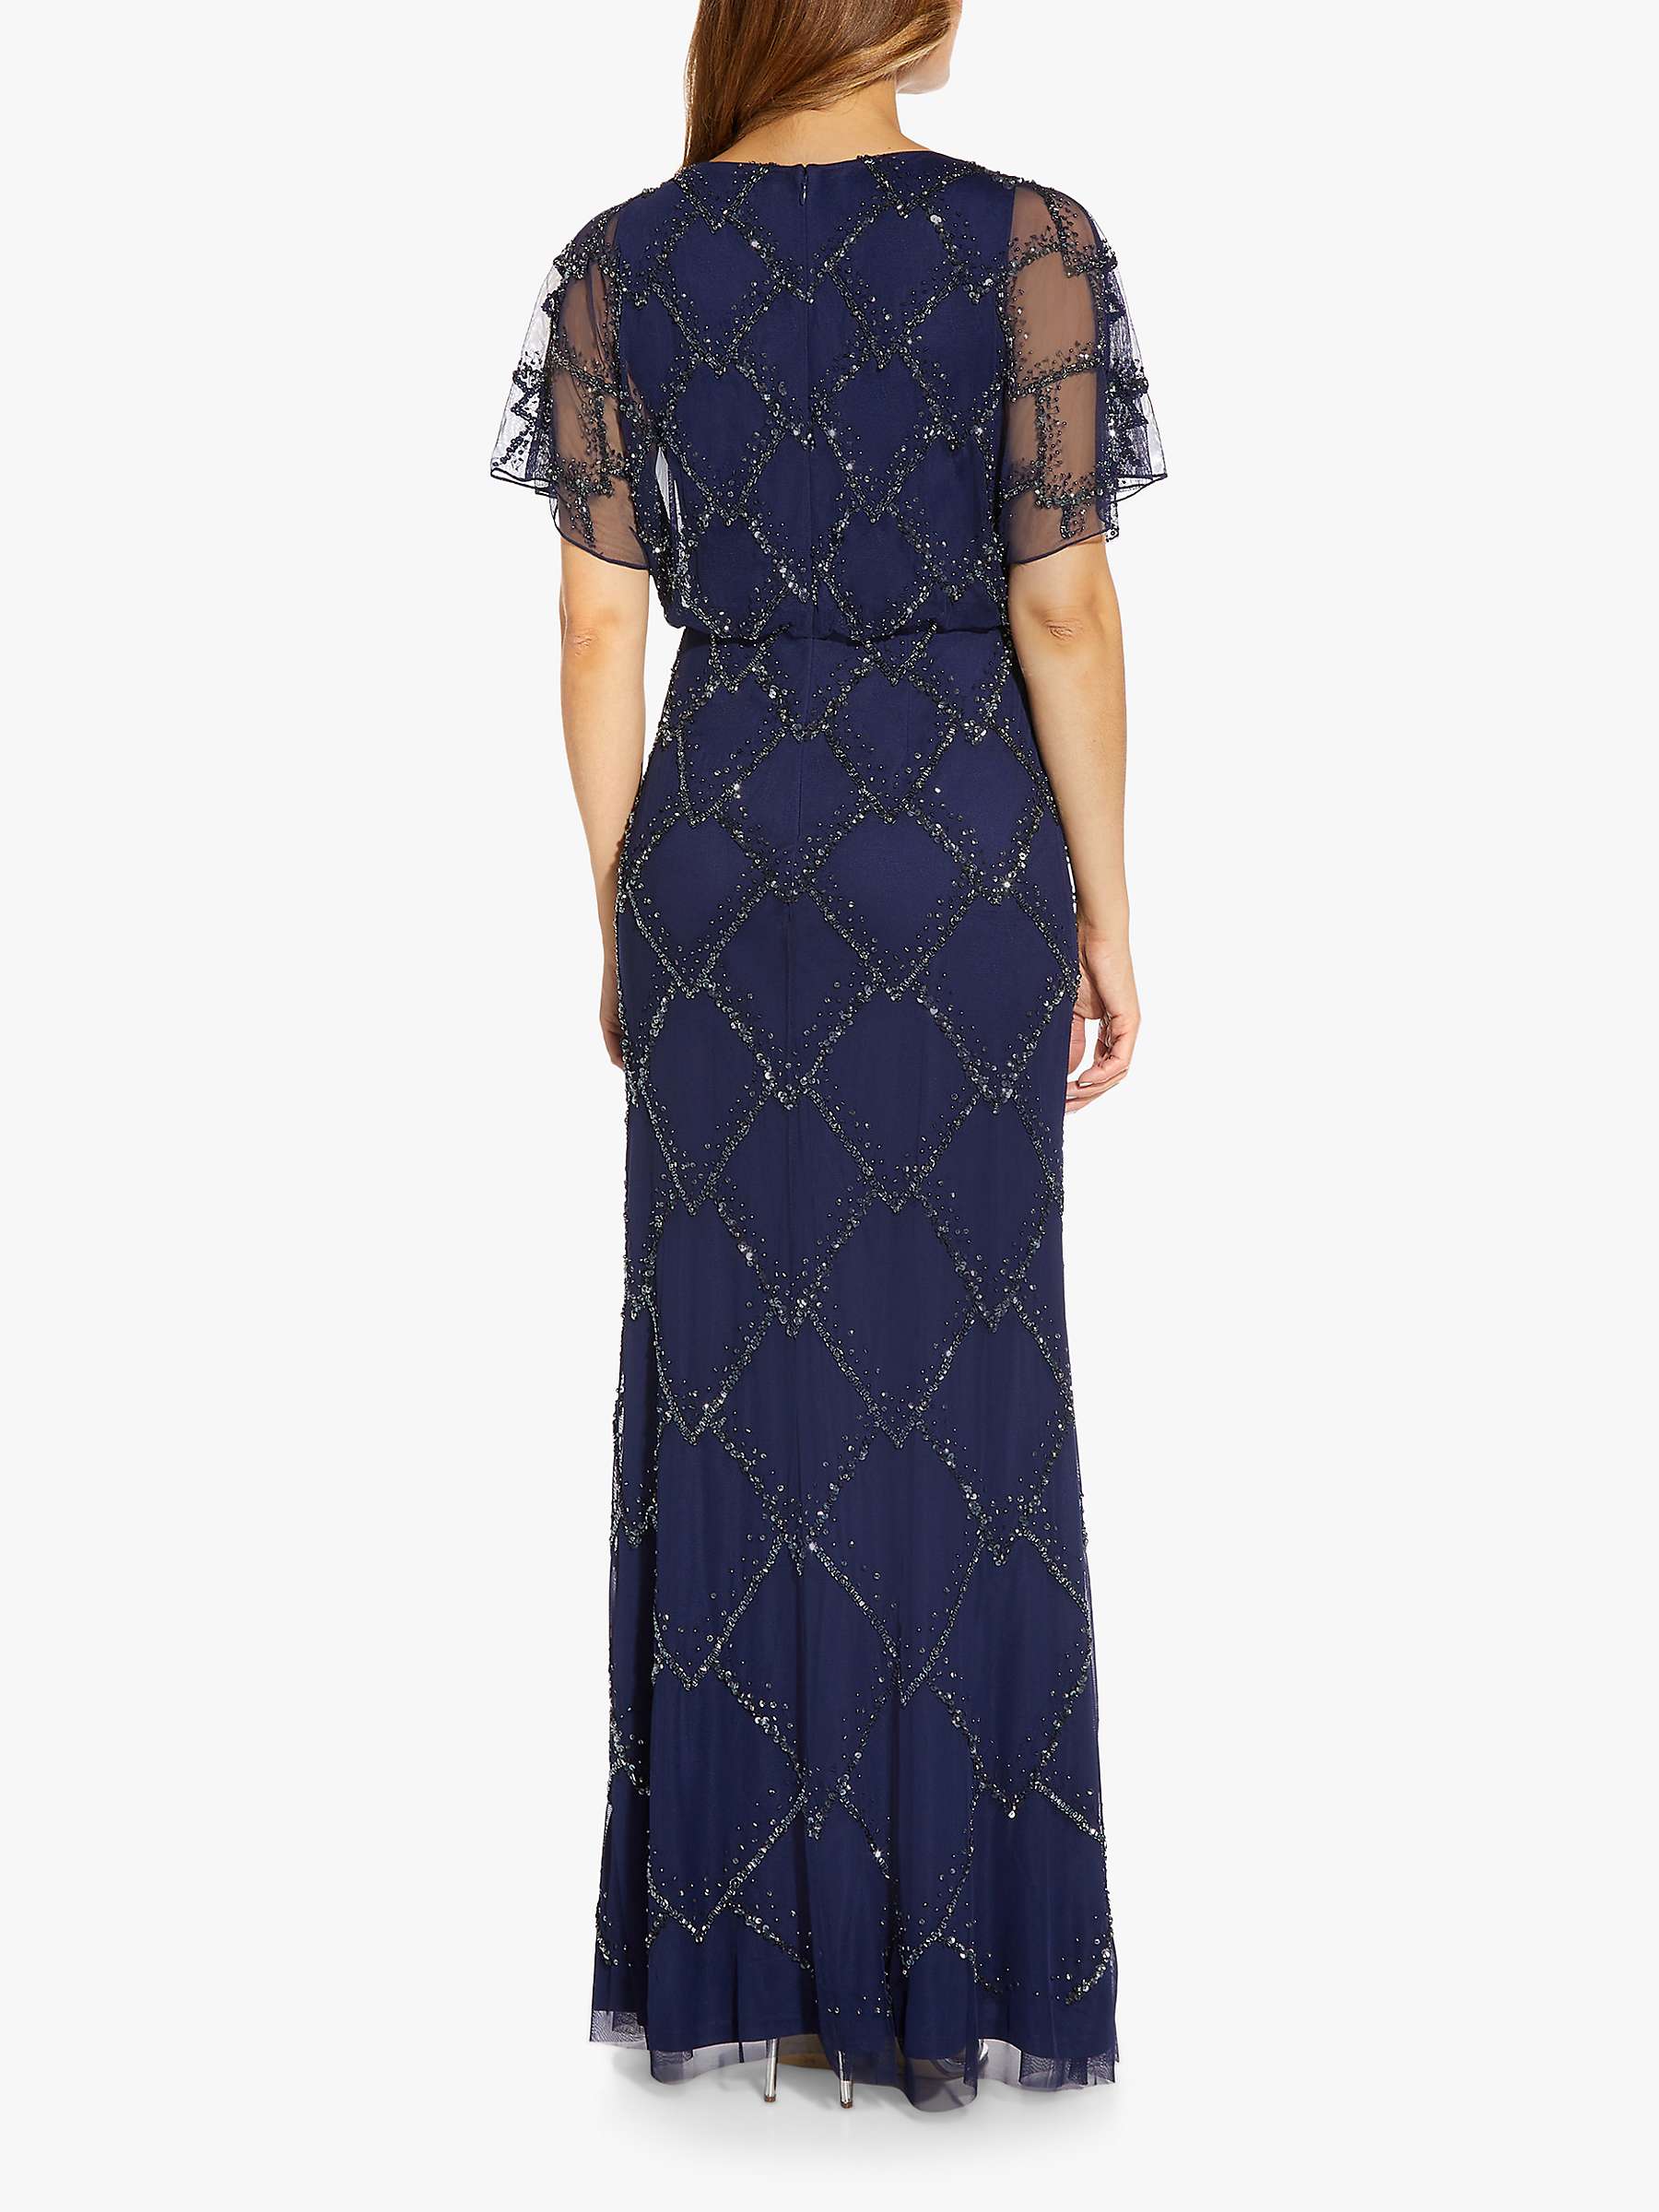 Buy Adrianna Papell Beaded Blouson Dress, Navy Online at johnlewis.com